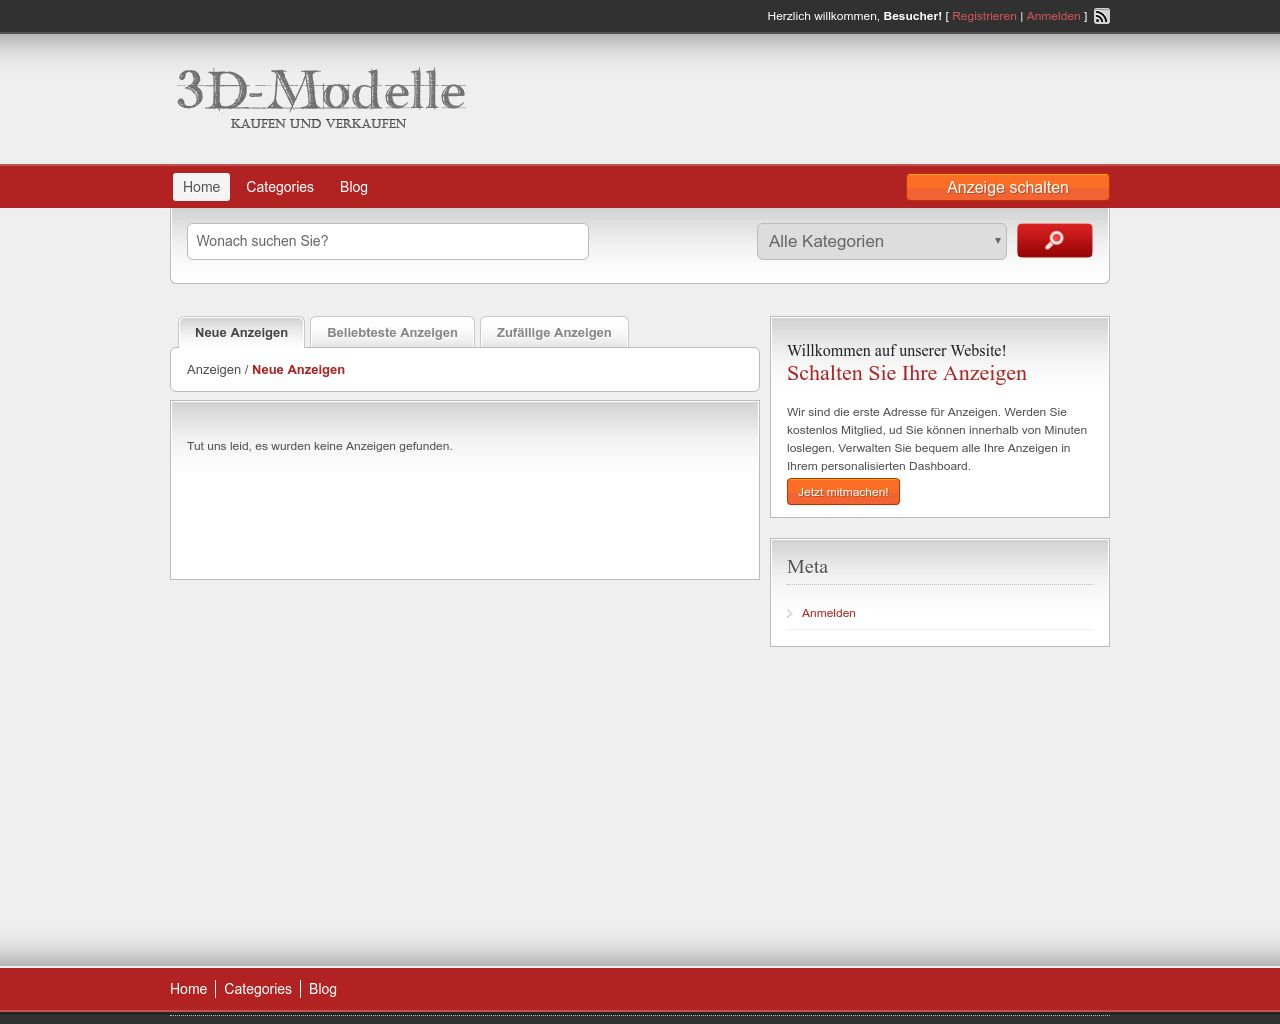 Bild Website 3d-modelle.at in 1280x1024